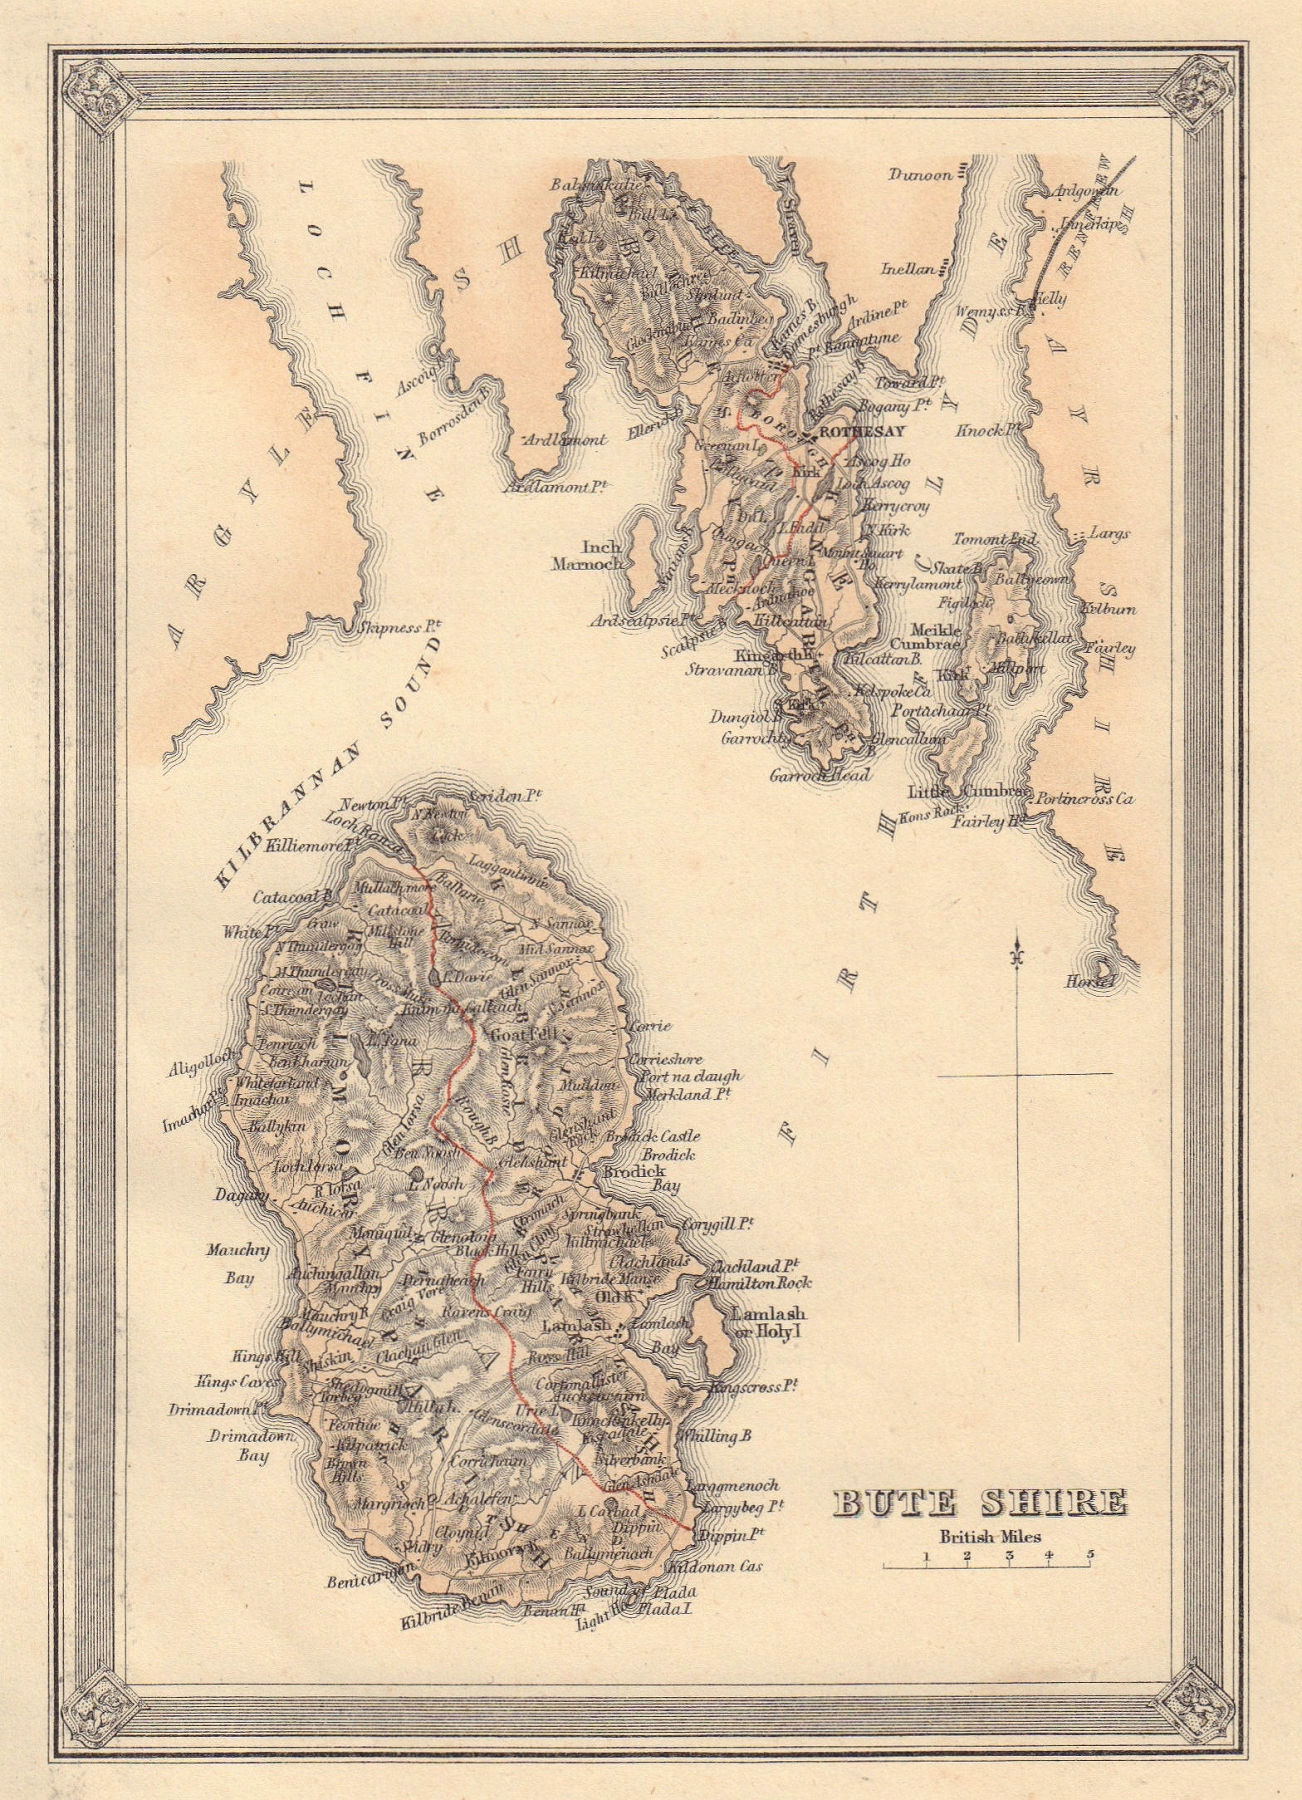 Associate Product Decorative antique county map of Buteshire, Scotland. FULLARTON 1866 old